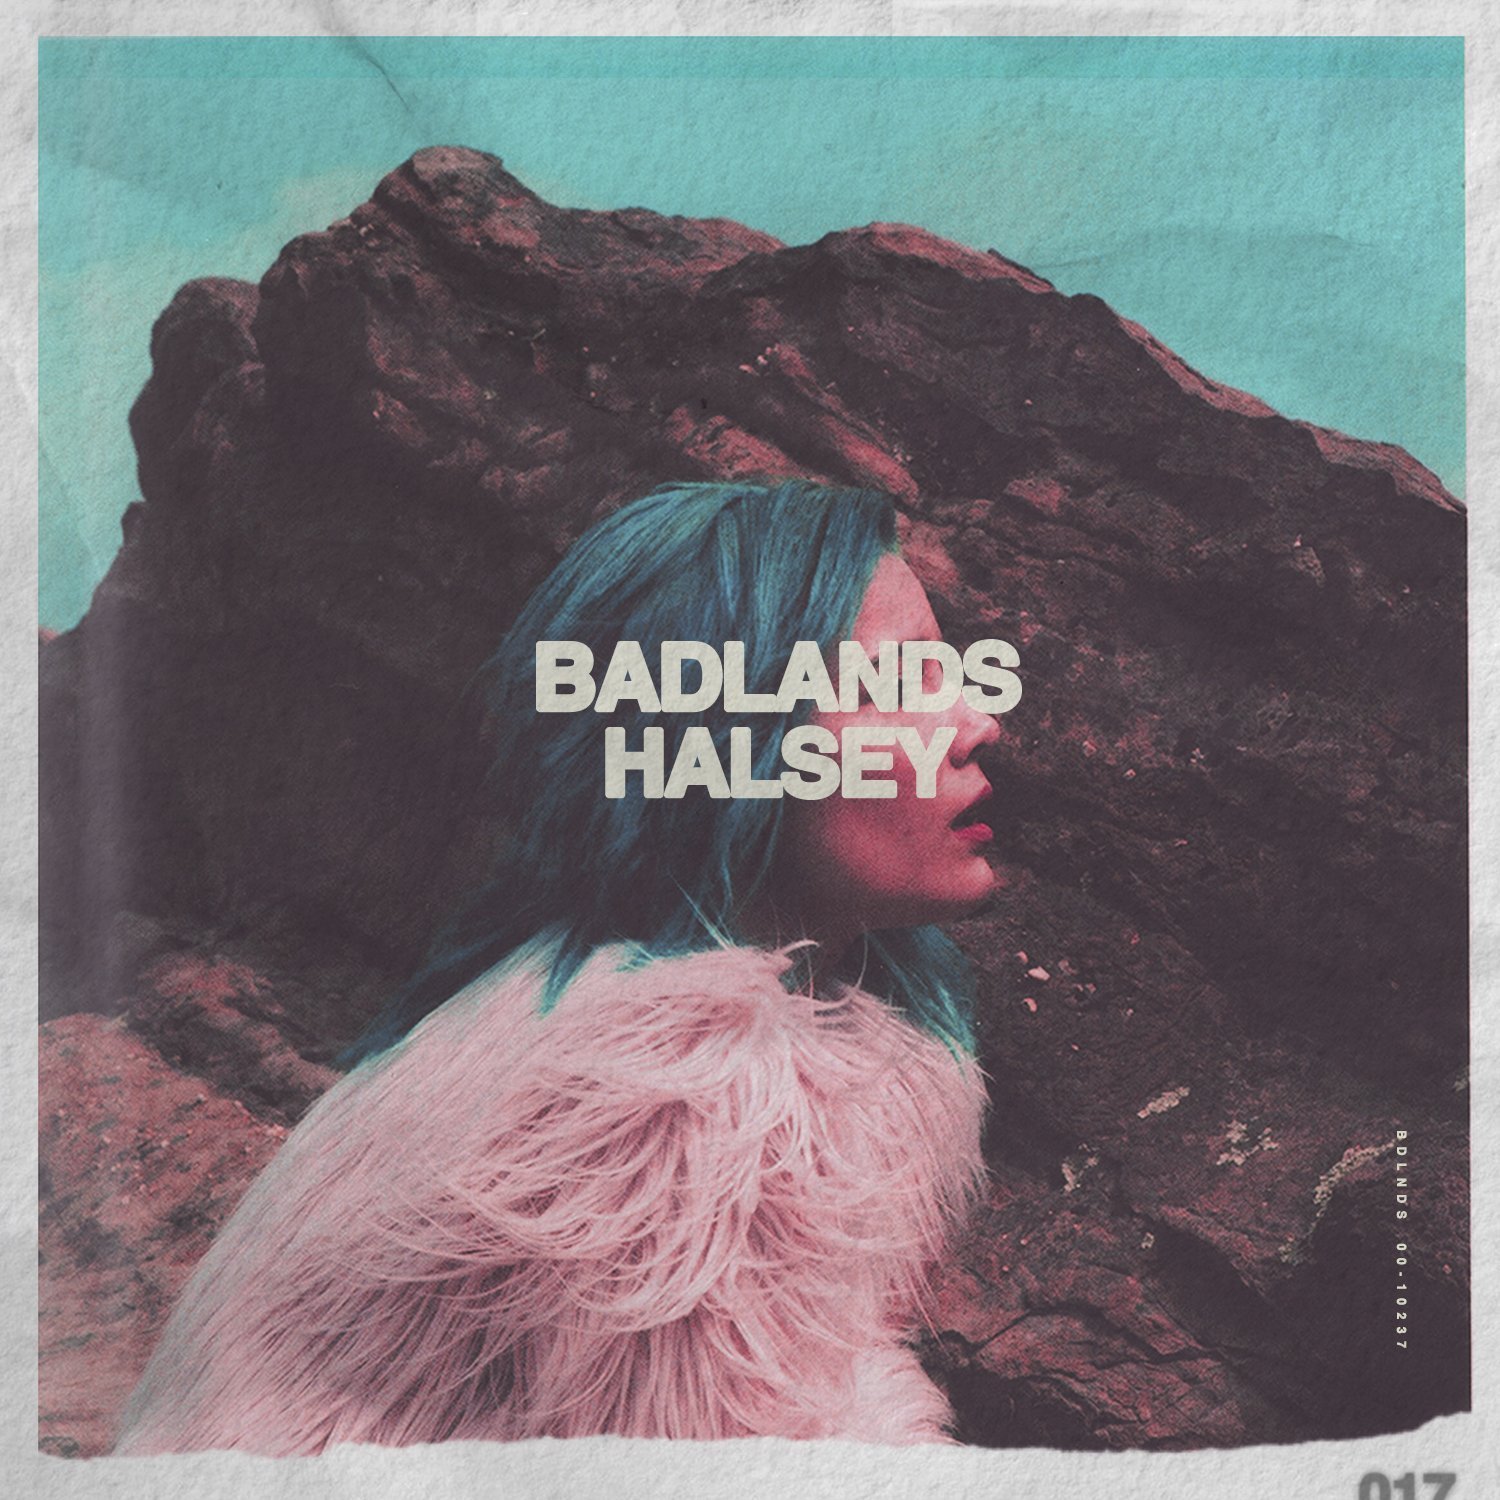 REVIEW: ‘Badlands’ a creative masterpiece for Indie pop artist Halsey